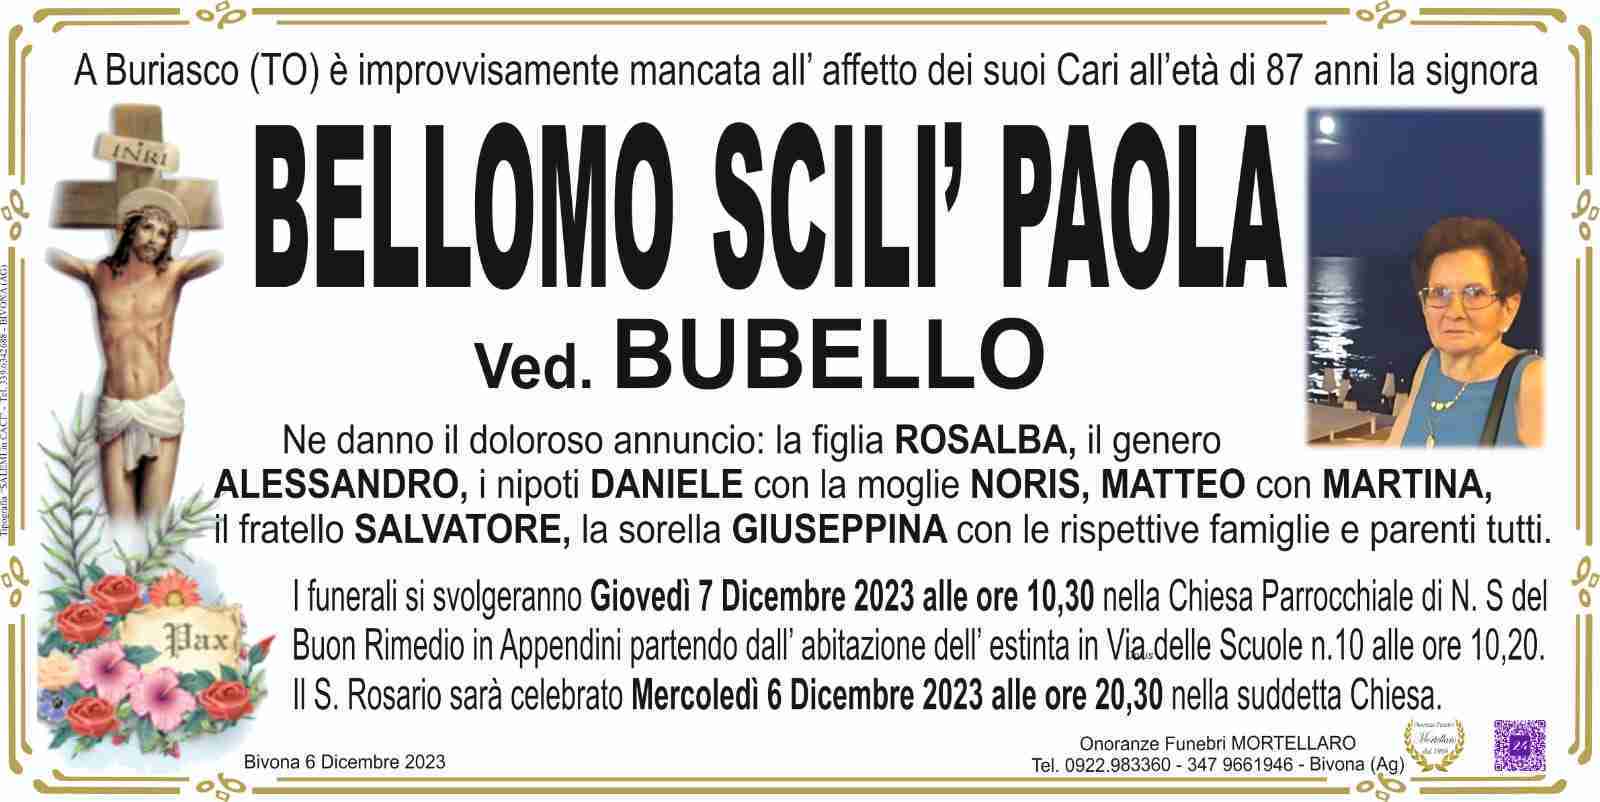 Paola Bellomo Scilì